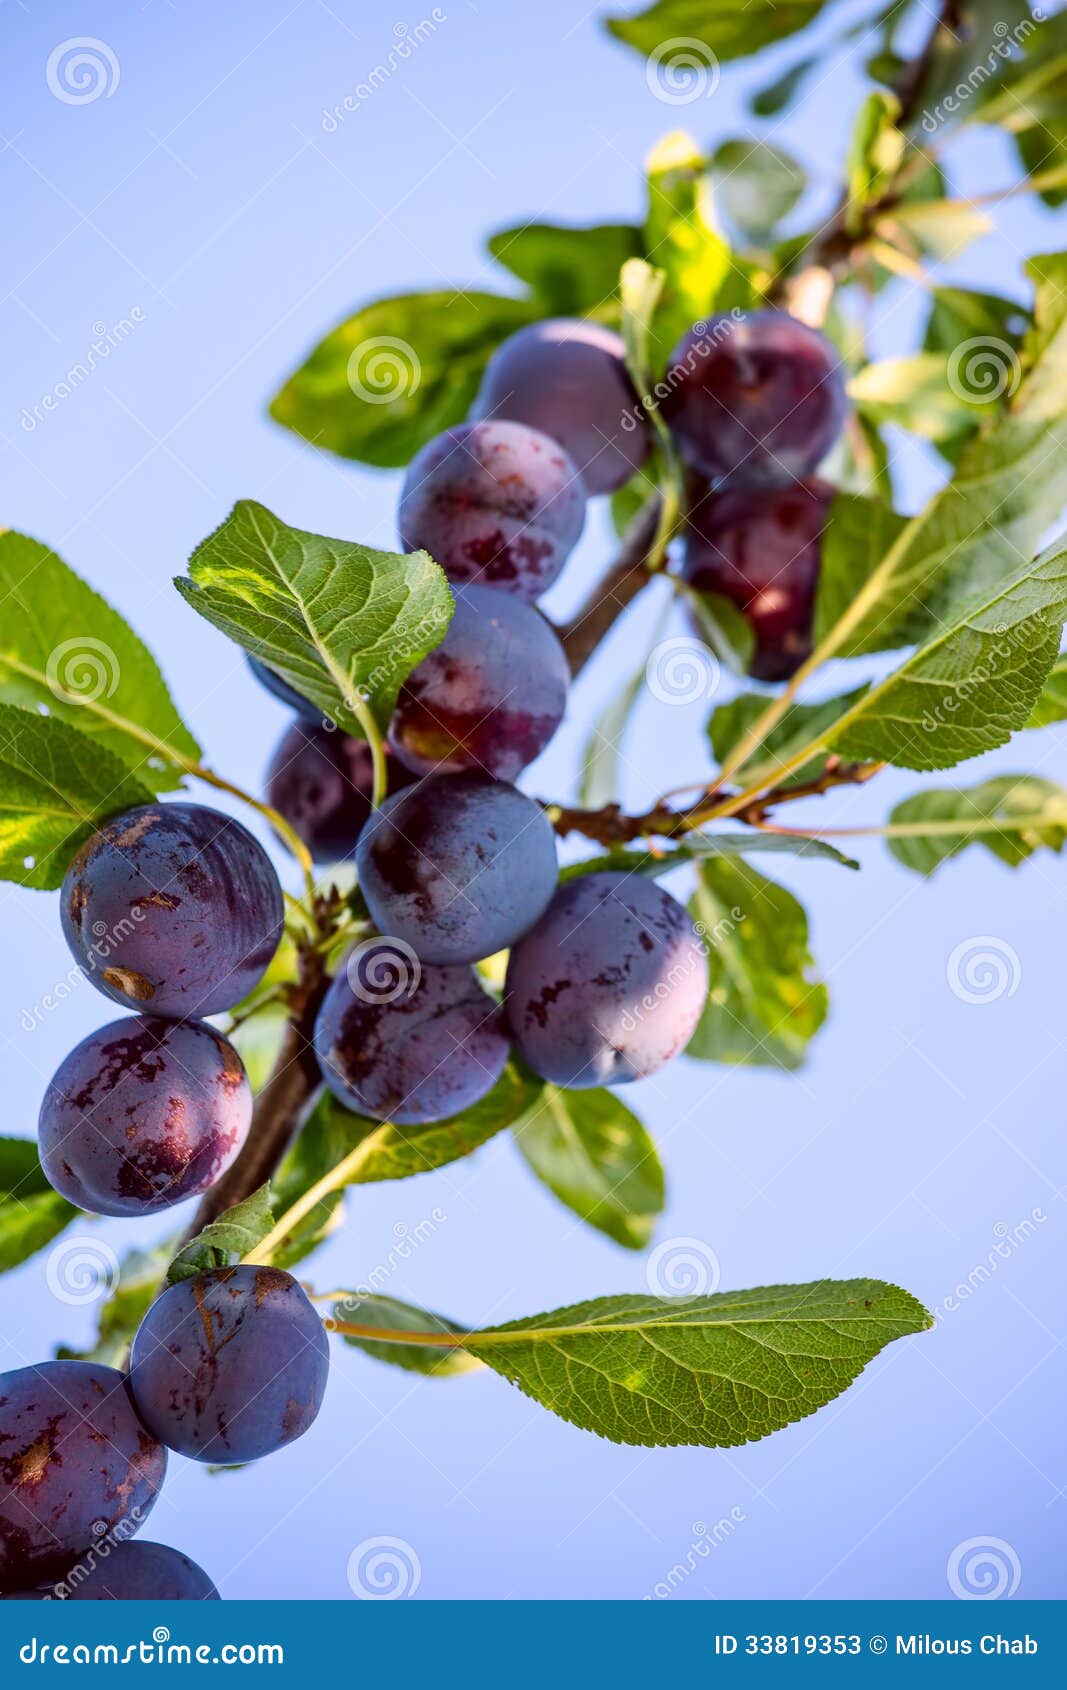 fruits of plum tree